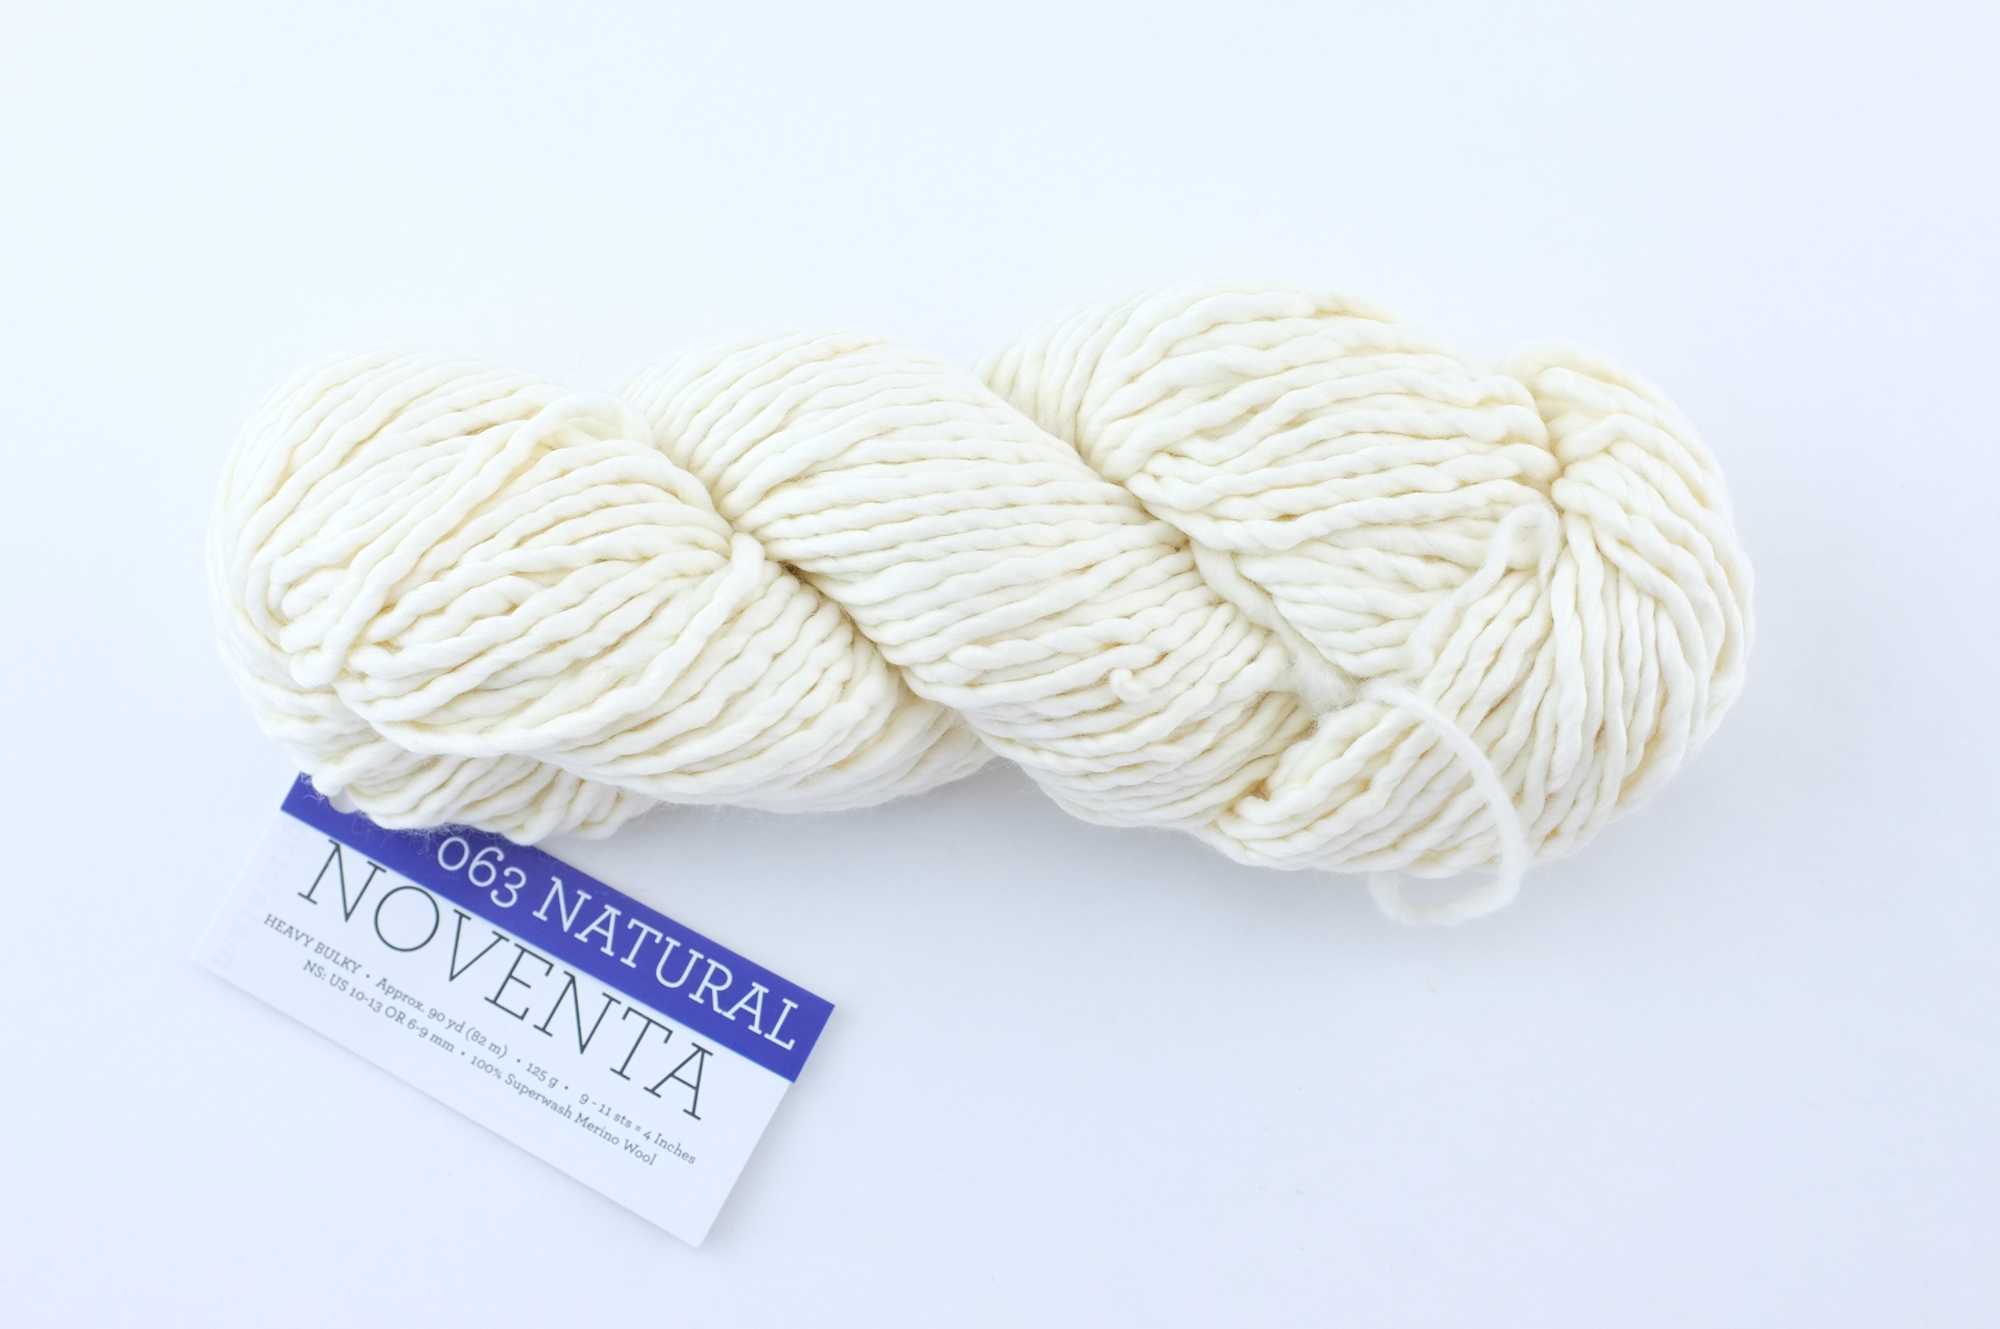 Malabrigo Noventa in color Natural, Merino Wool Super Bulky Knitting Yarn,  machine washable, neutral off-white, #63